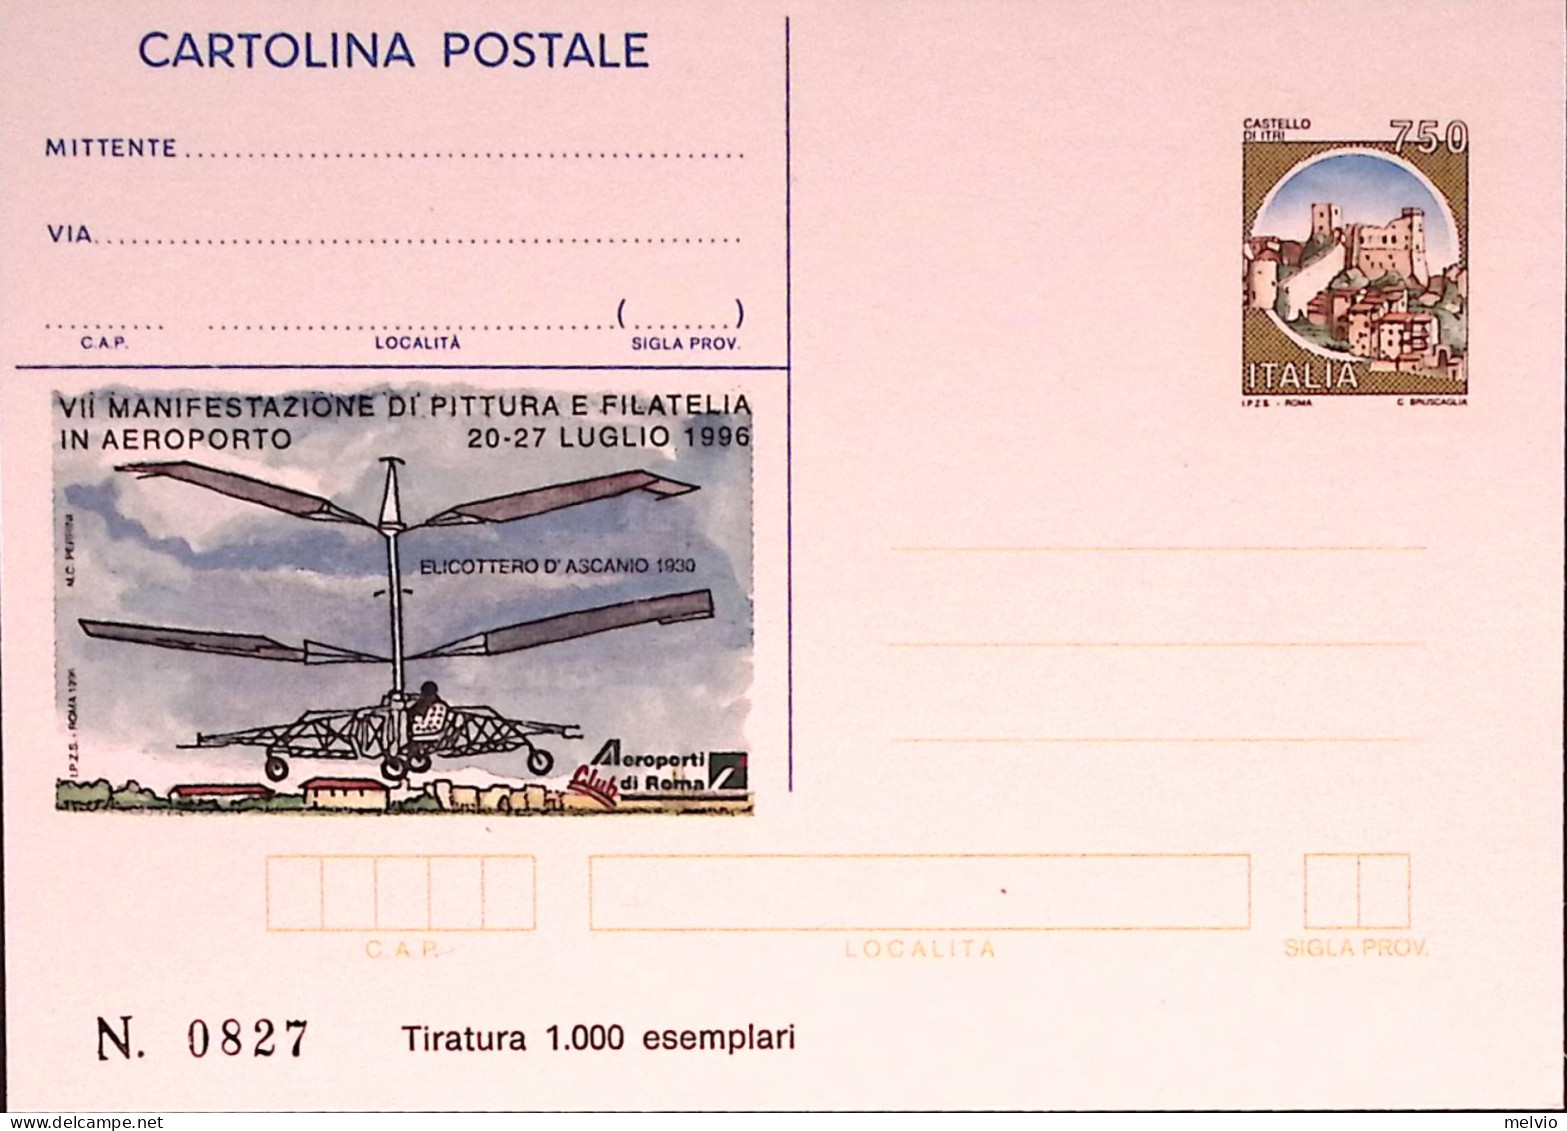 1996-CLUB AEROPORTI ROMA Cartolina Postale IPZS Lire 750 Nuova - Interi Postali